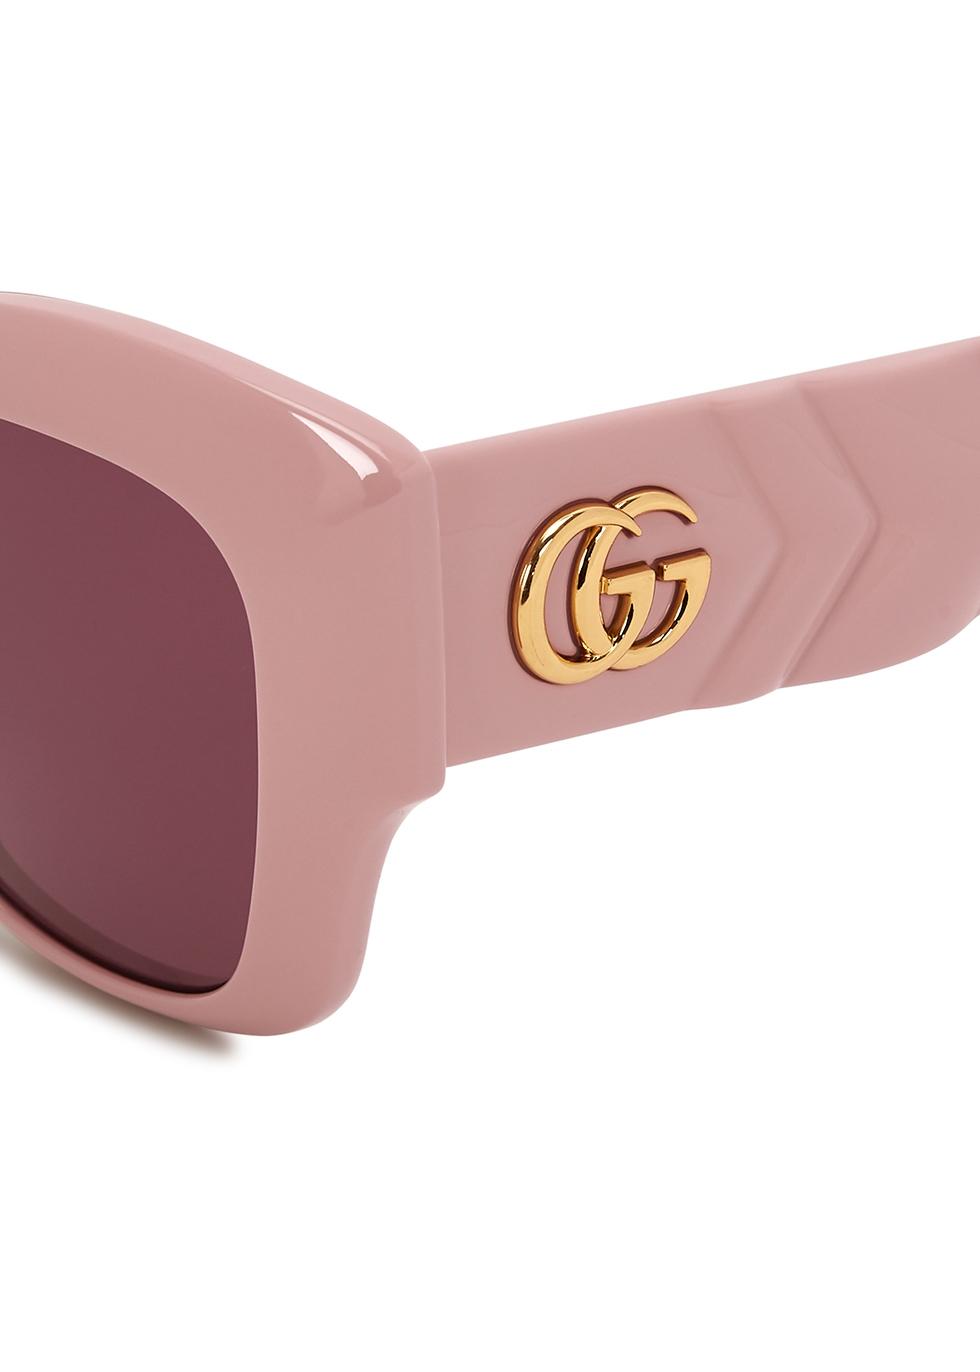 big pink gucci sunglasses